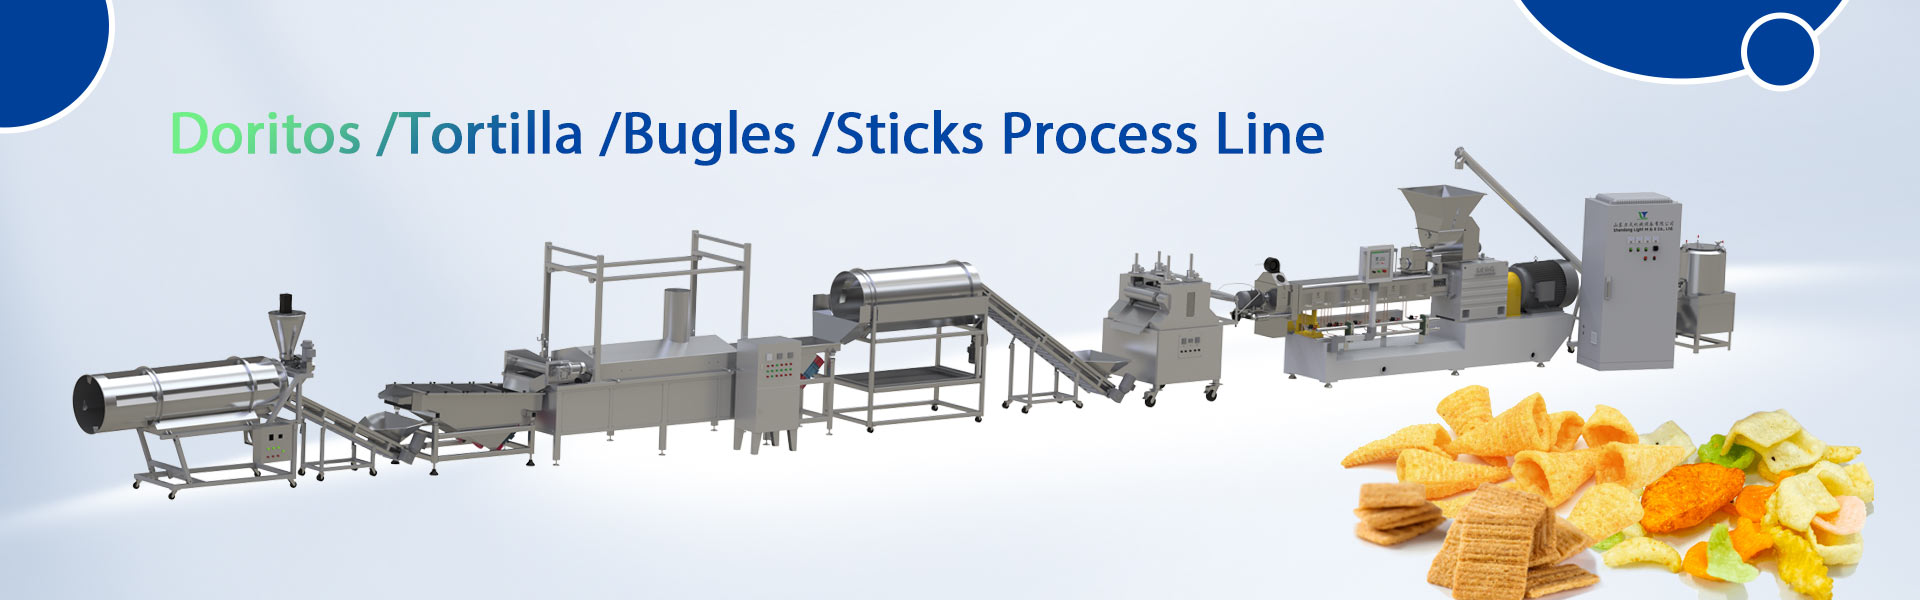 Doritos-TortillaBugles-Sticks-Process-Line